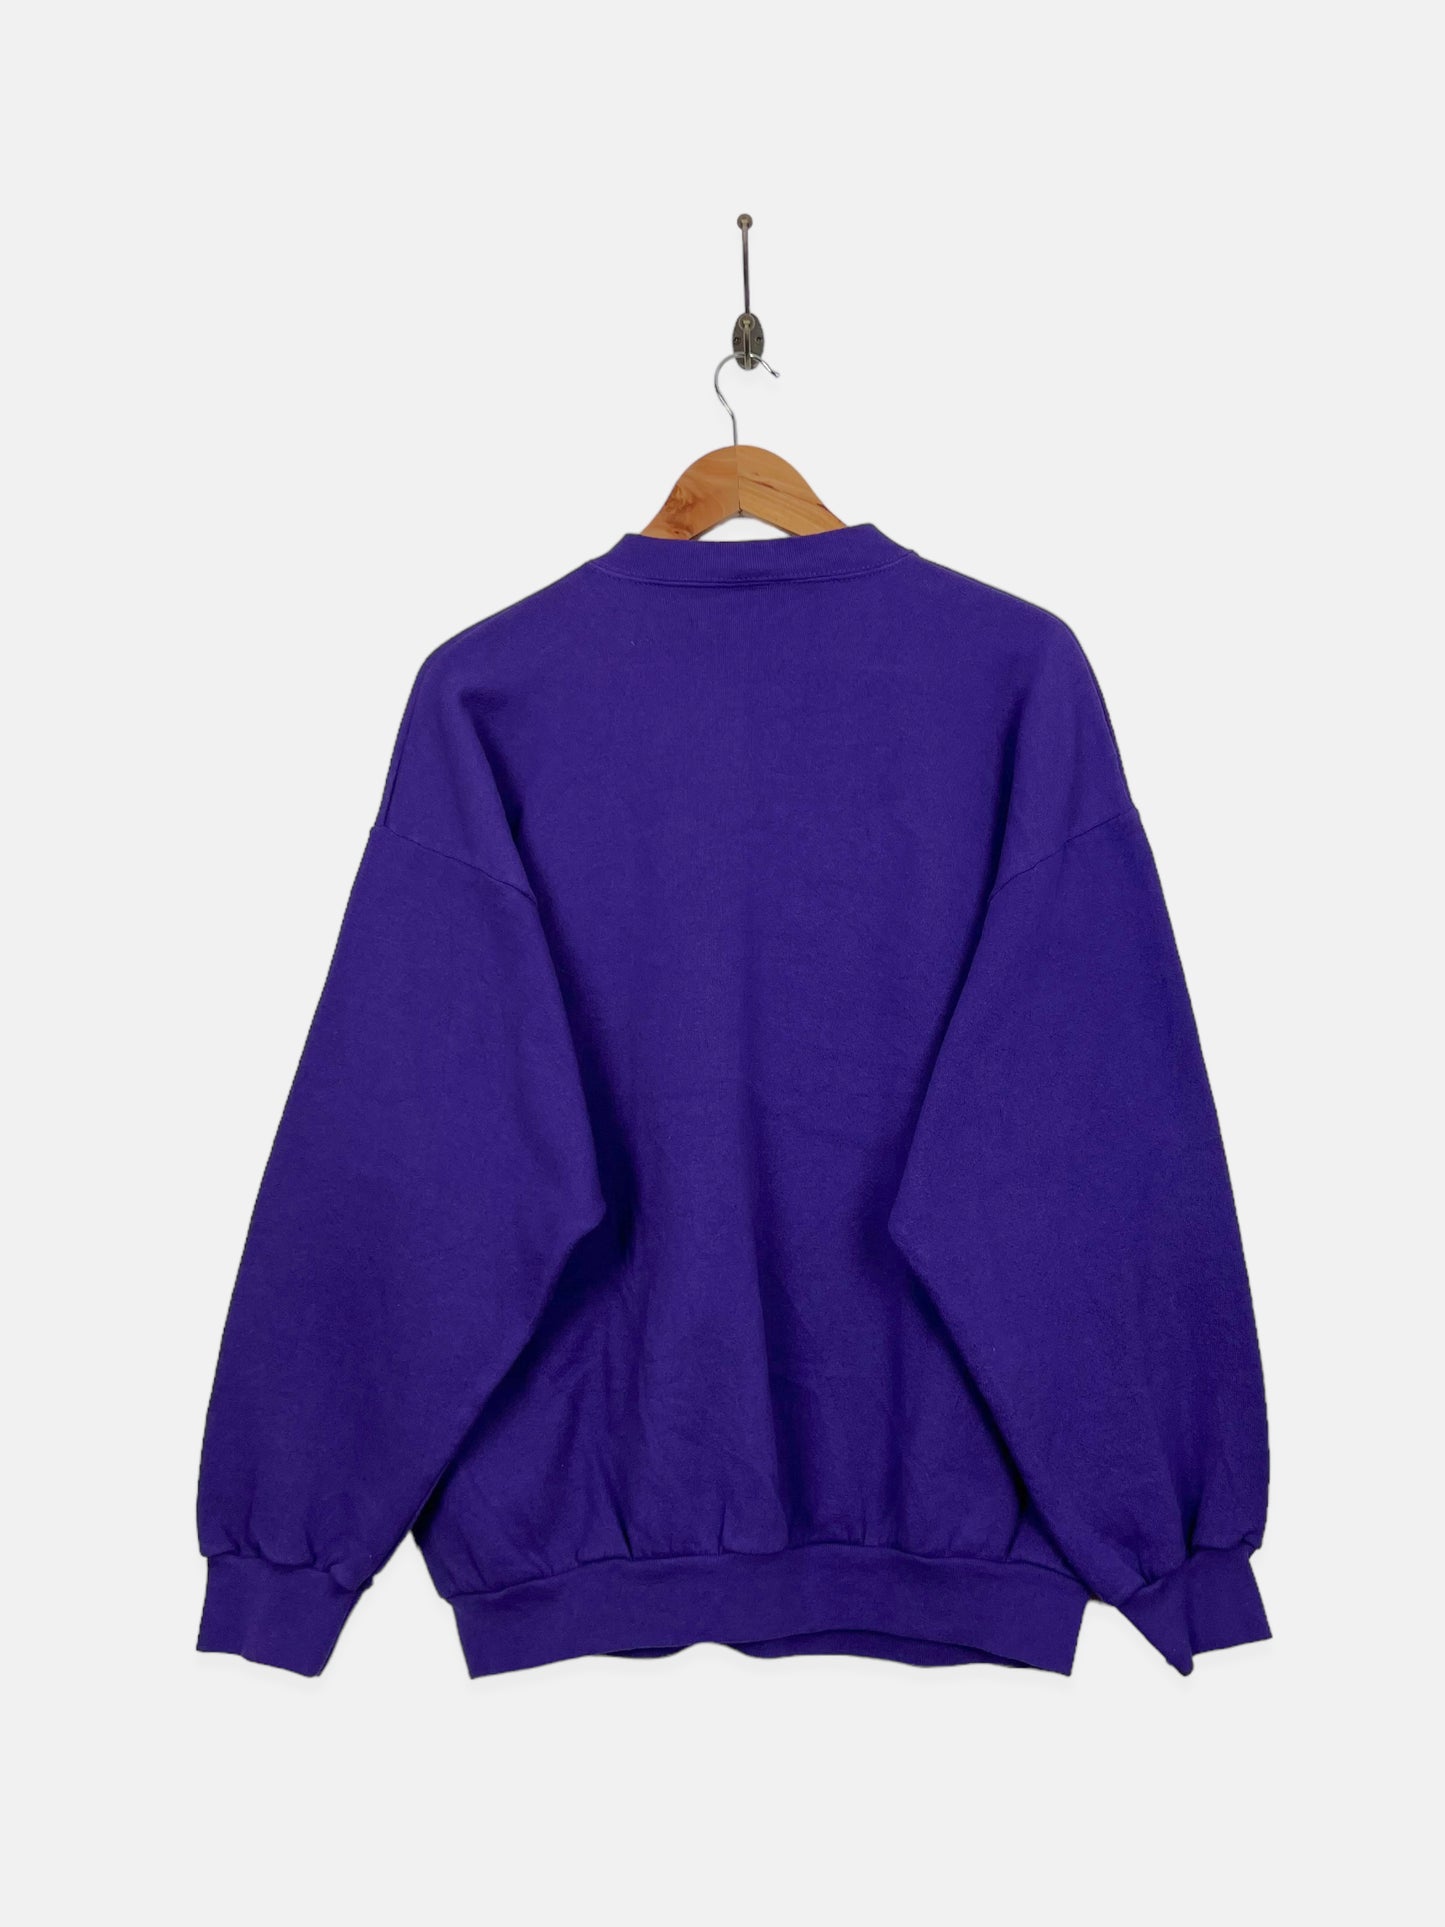 Baltimore Ravens NFL Vintage Sweatshirt Size L